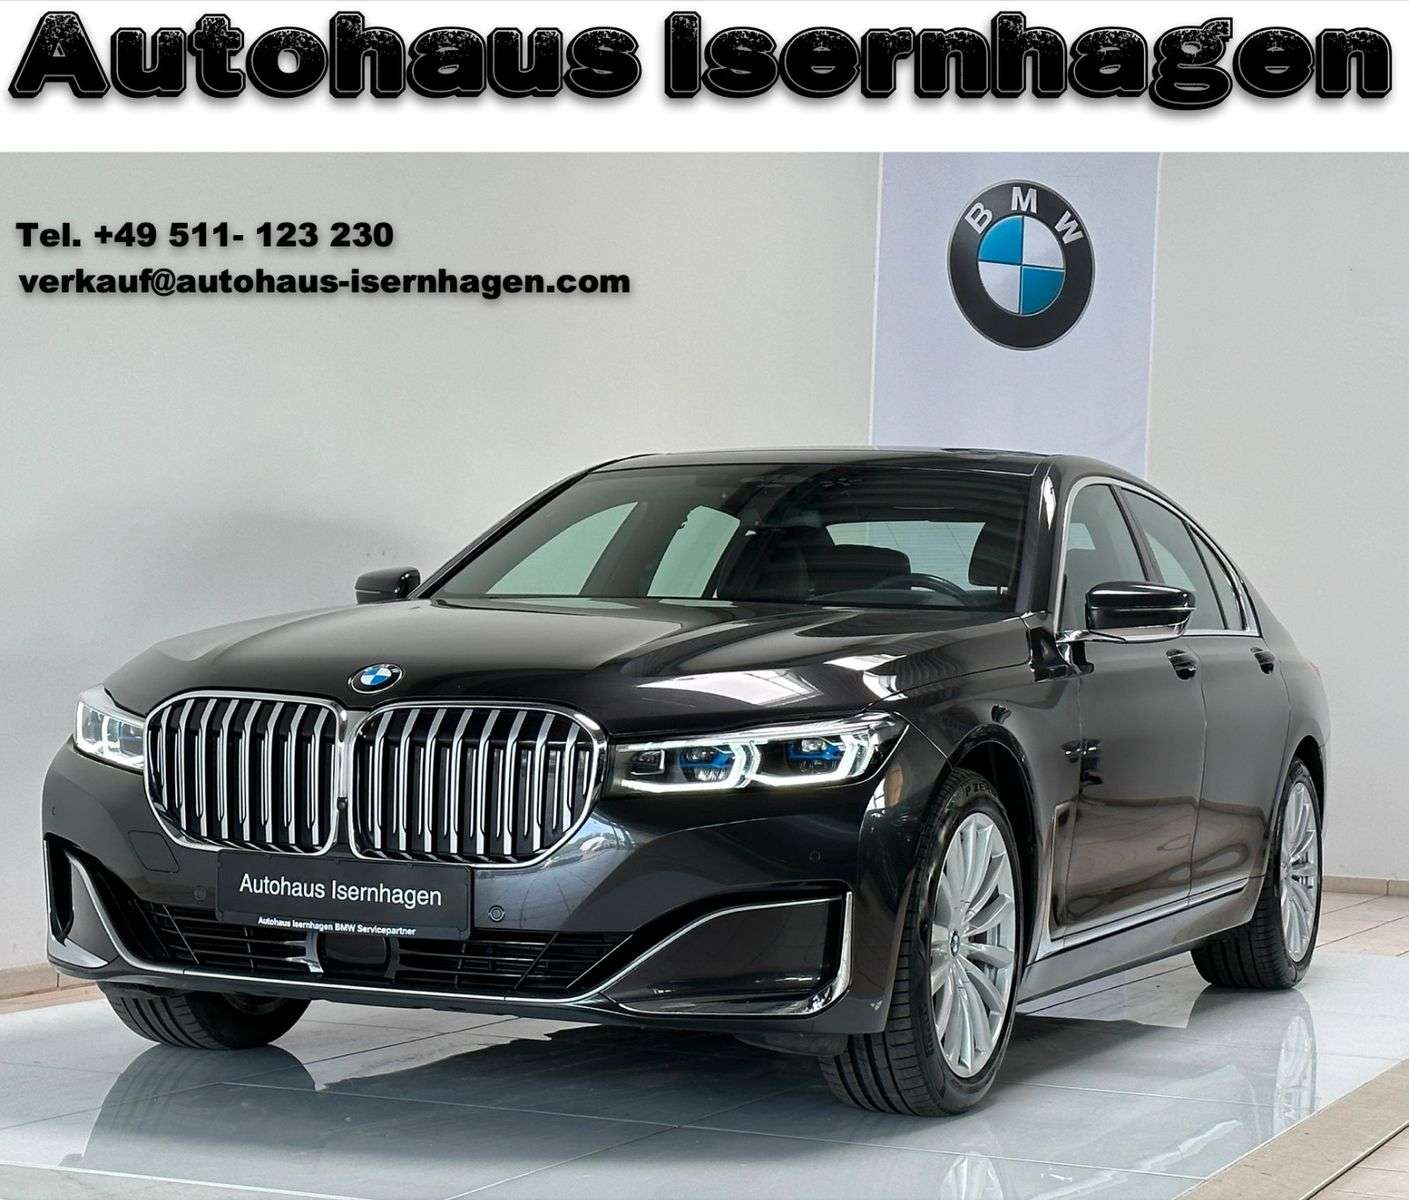 BMW 730 Sedan in Black used in Isernhagen for € 57,499.-